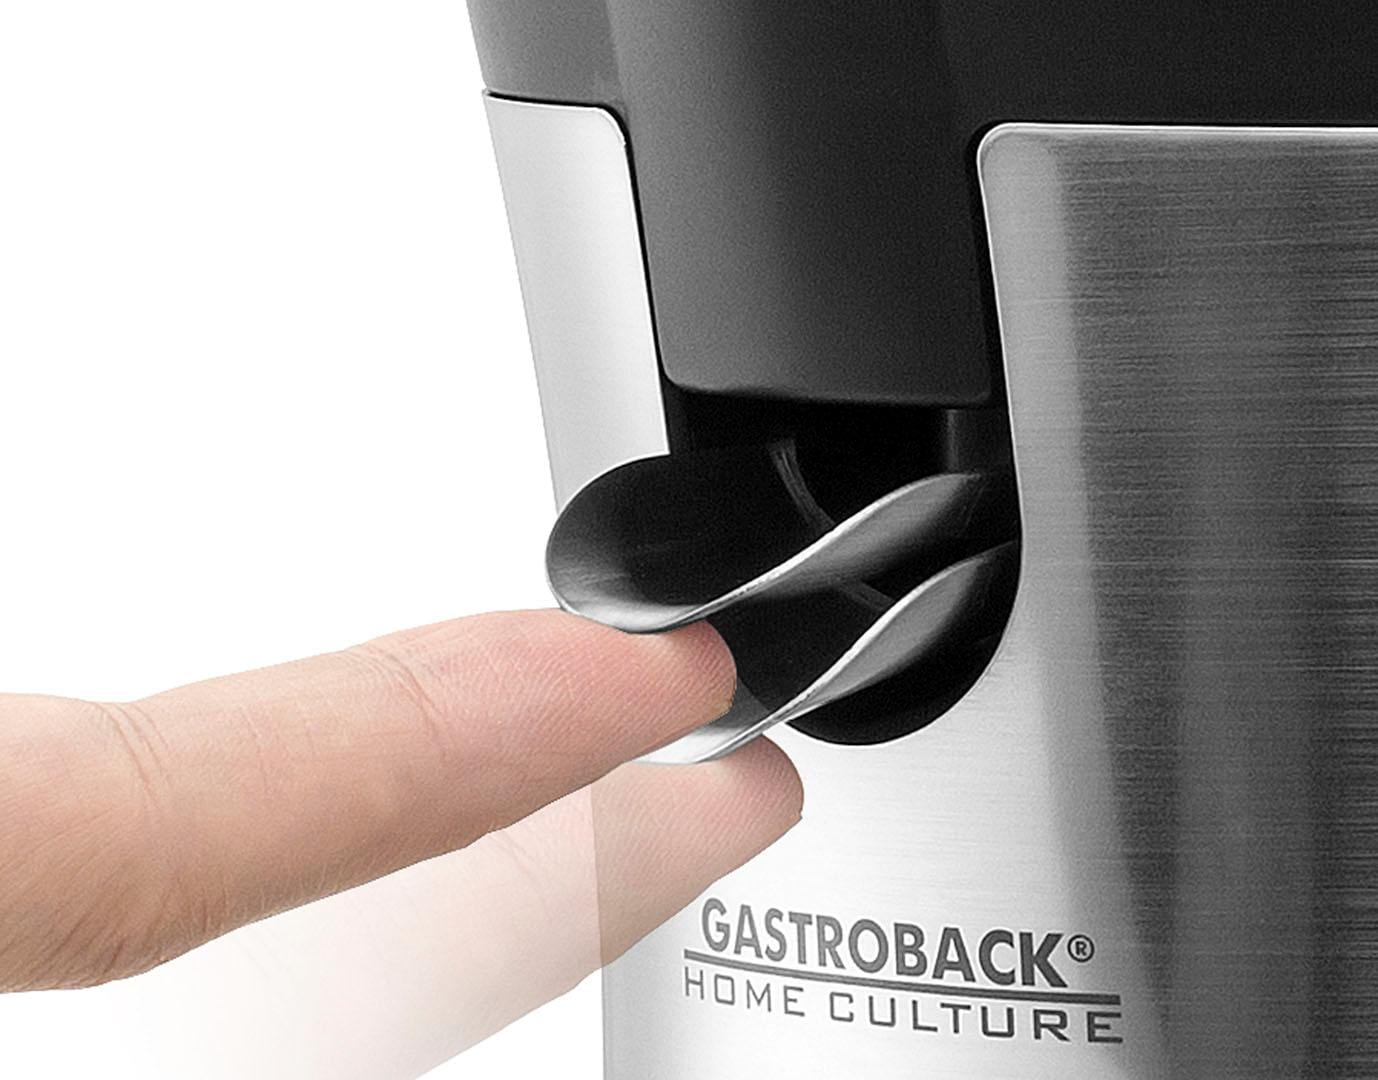 Gastroback Zitruspresse »Gastroback 41138 Home Culture«, 110 W